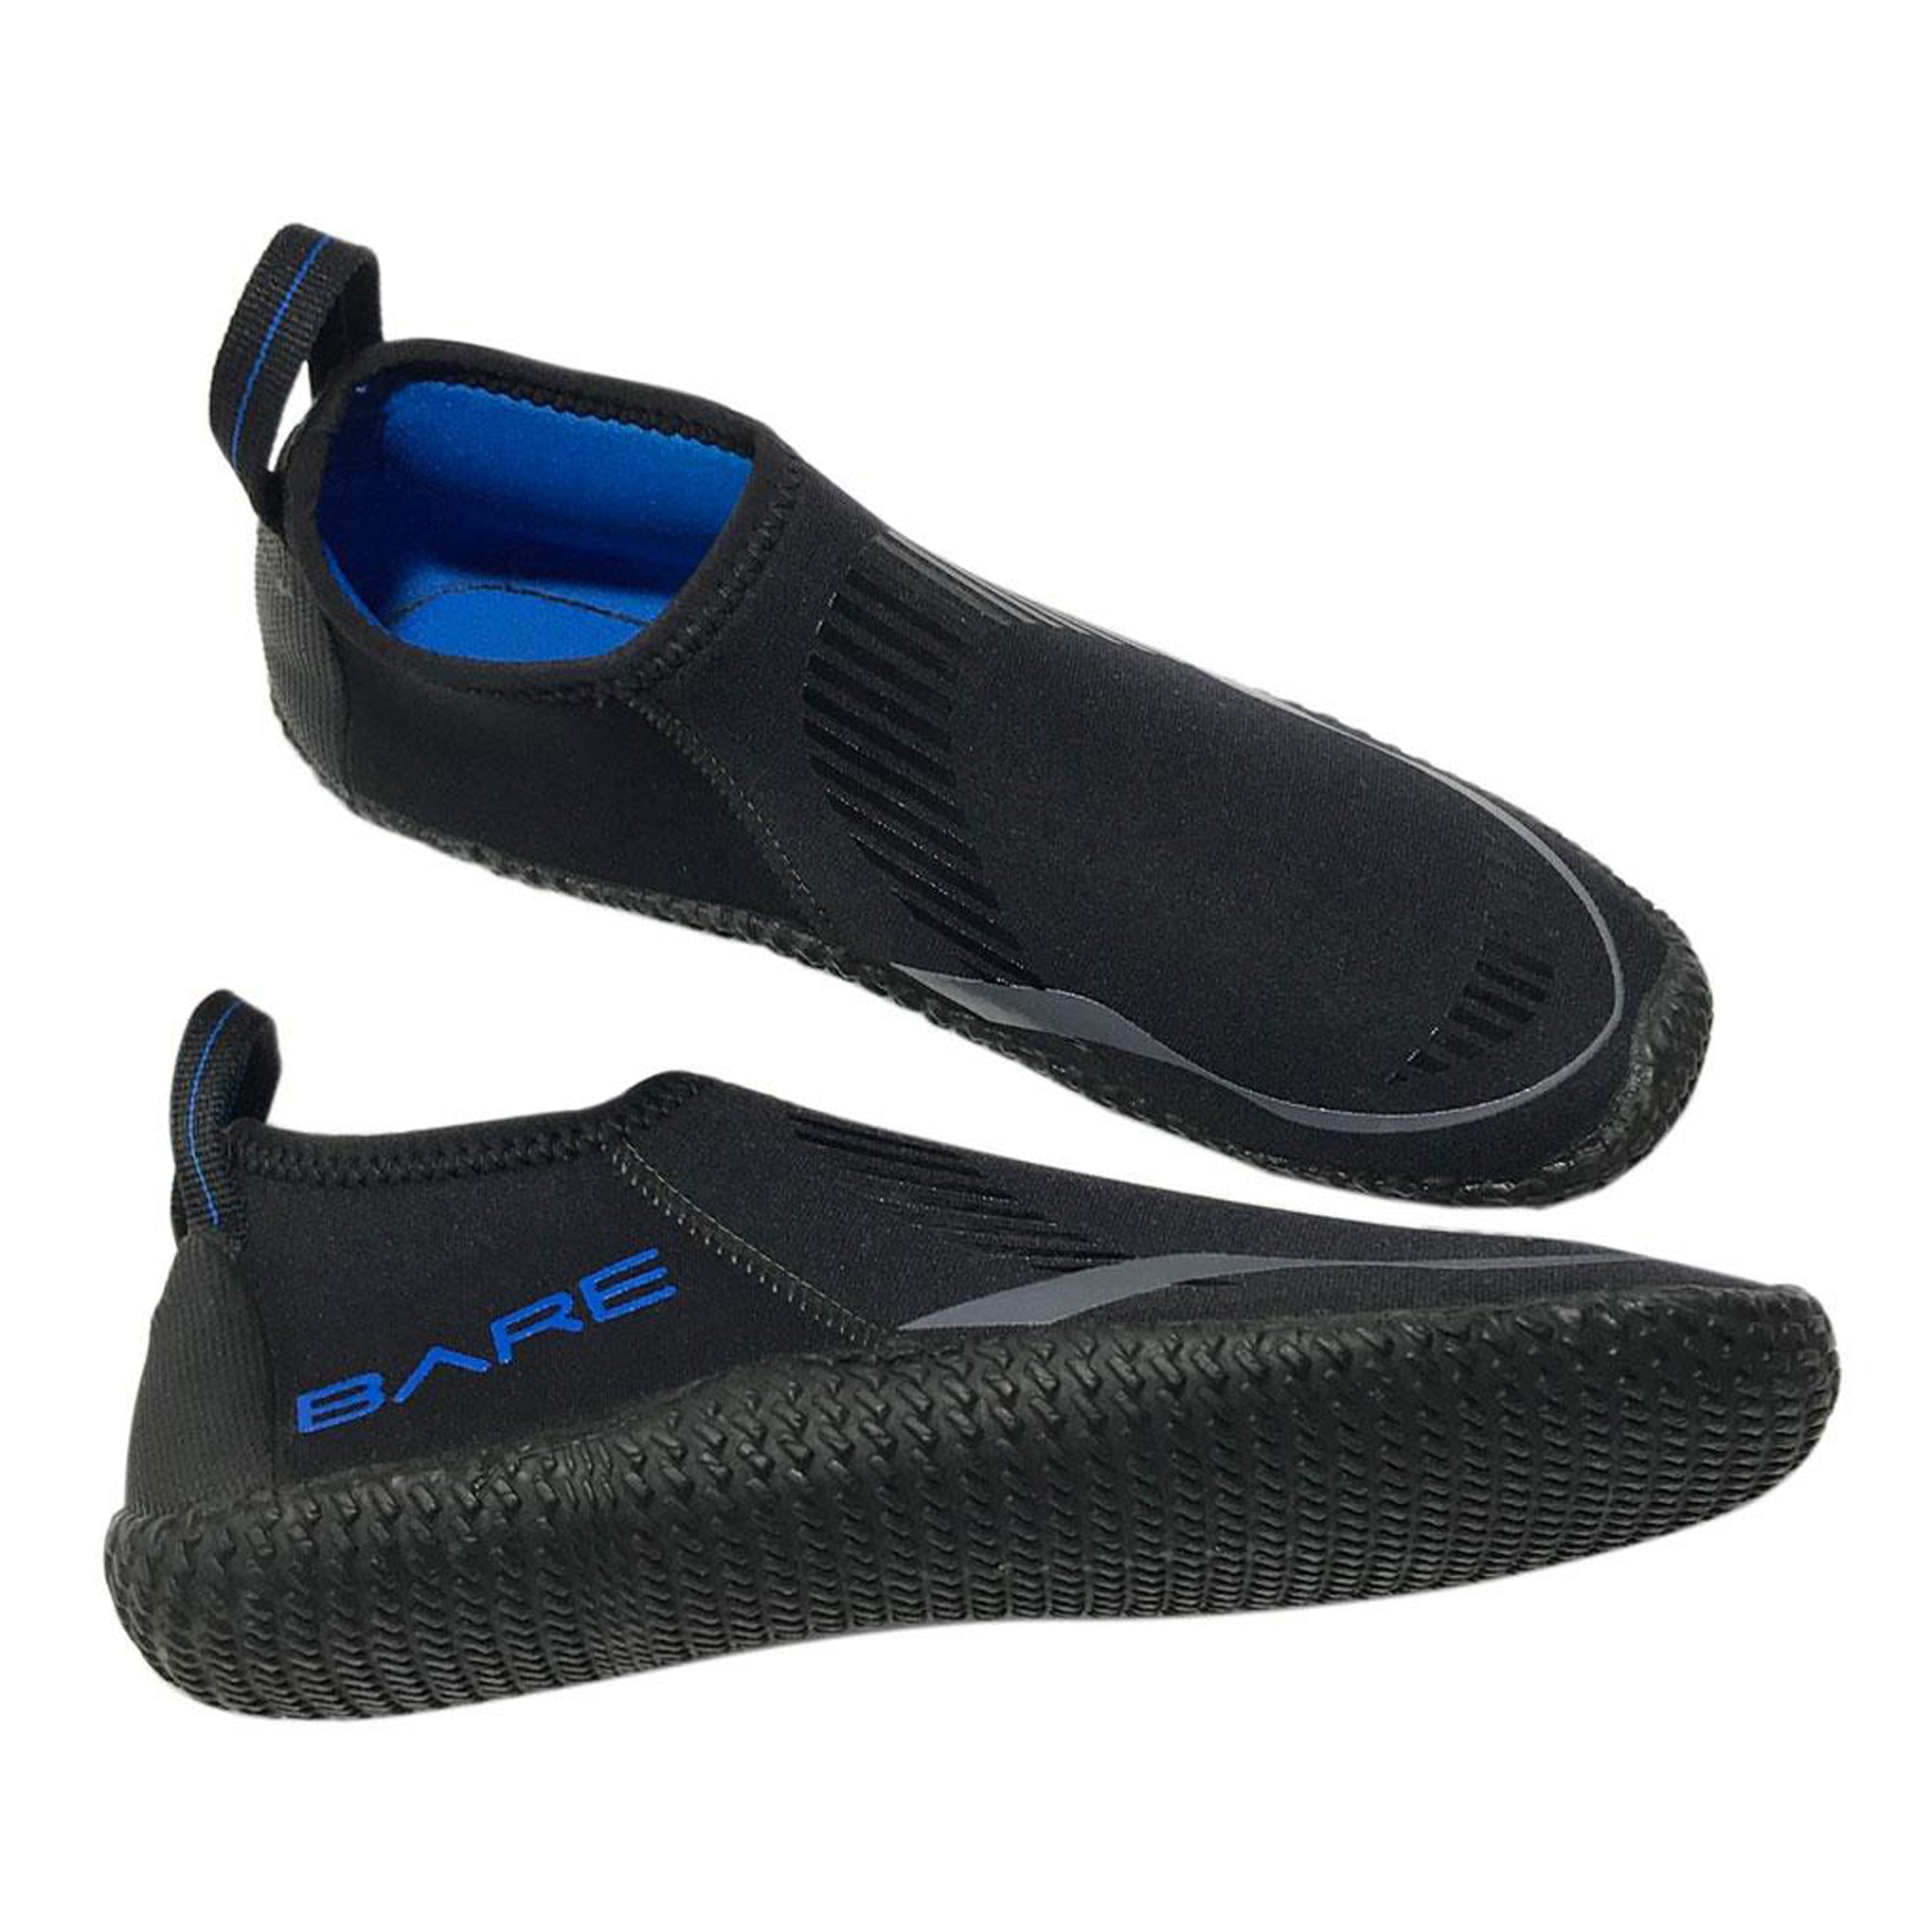 3mm Feet-Boots-Snorkeling, diver, sharkskin, scuba diving hk, warm protection, sharkskin, dive wear, bare wetsuit, aeroskin wetsuit, 浮潛